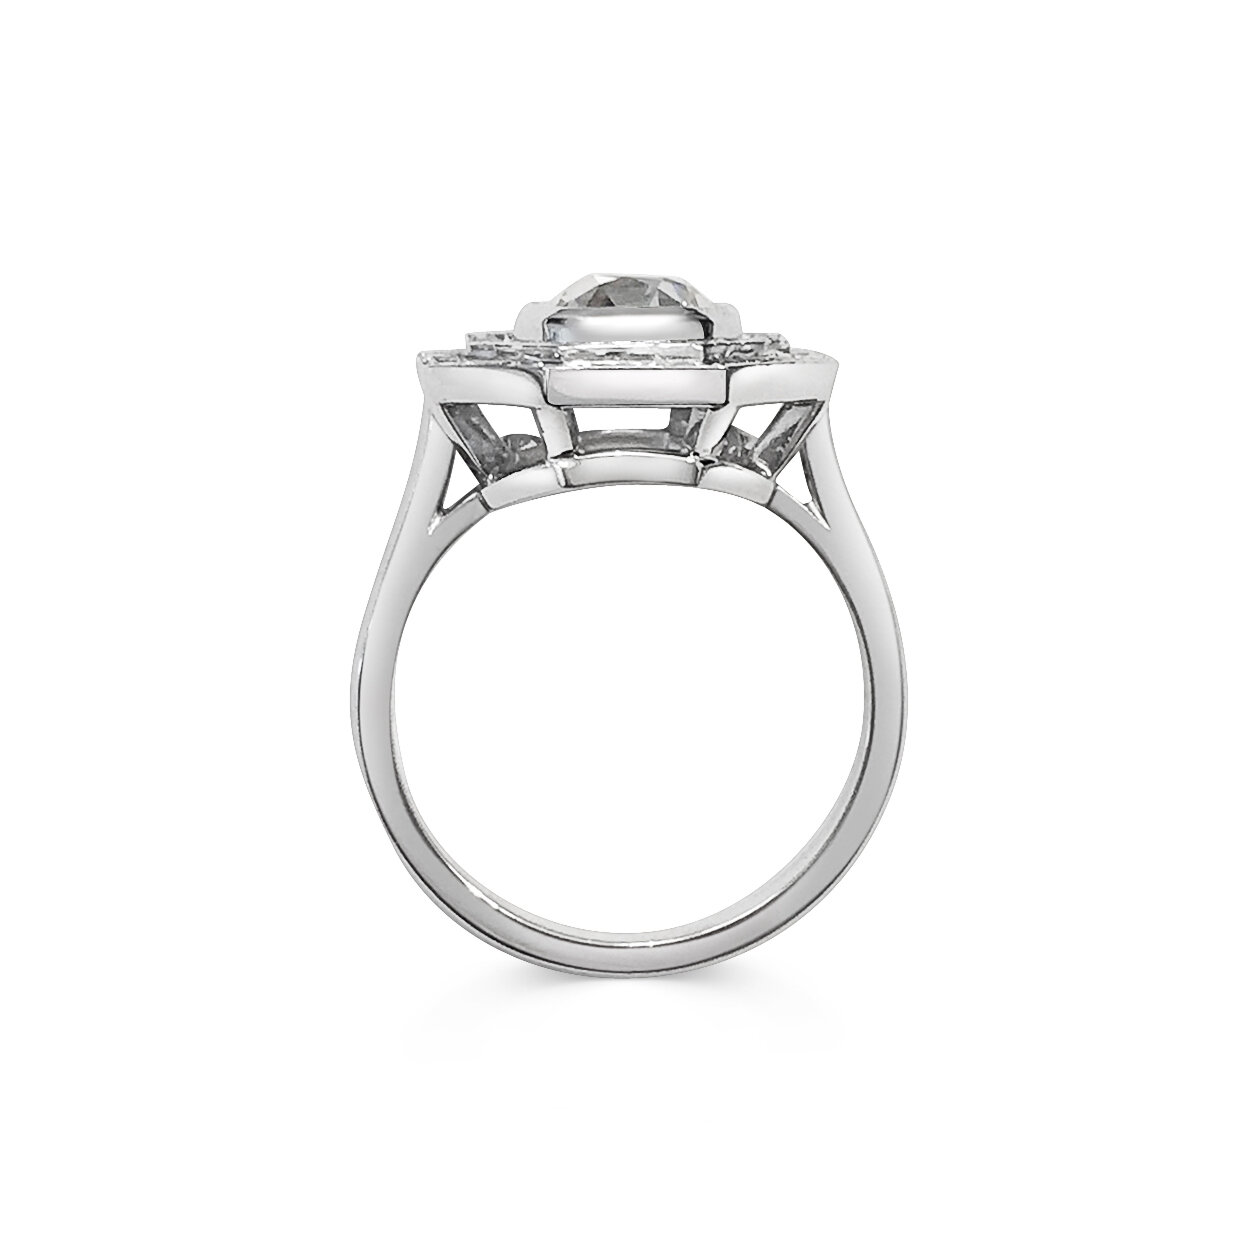 Diamond and emerald target engagement ring-1.jpg